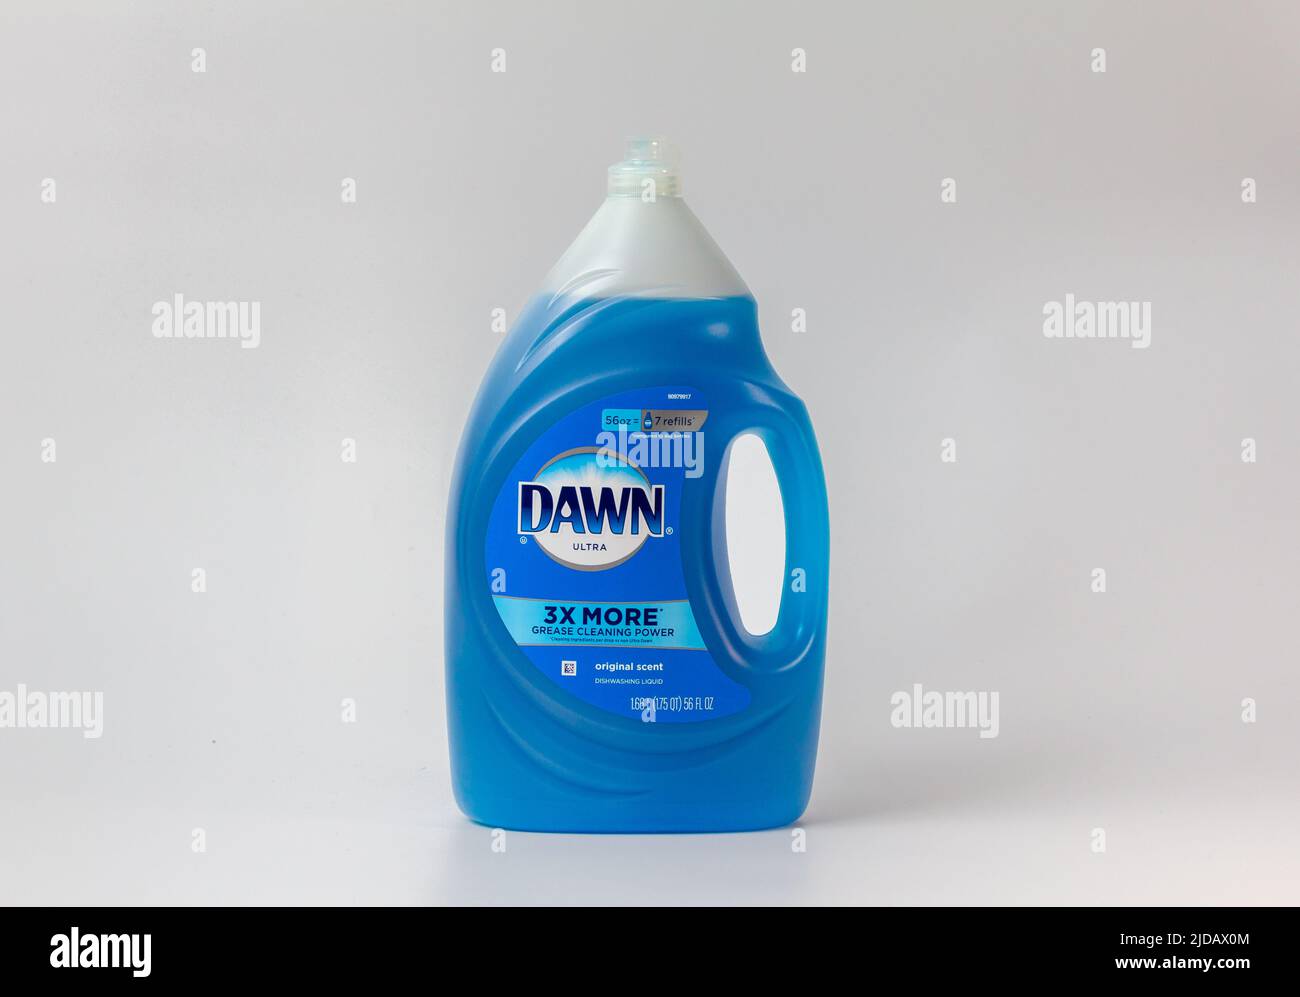 Dawn liquid dishwashing soap hi-res stock photography and images - Alamy